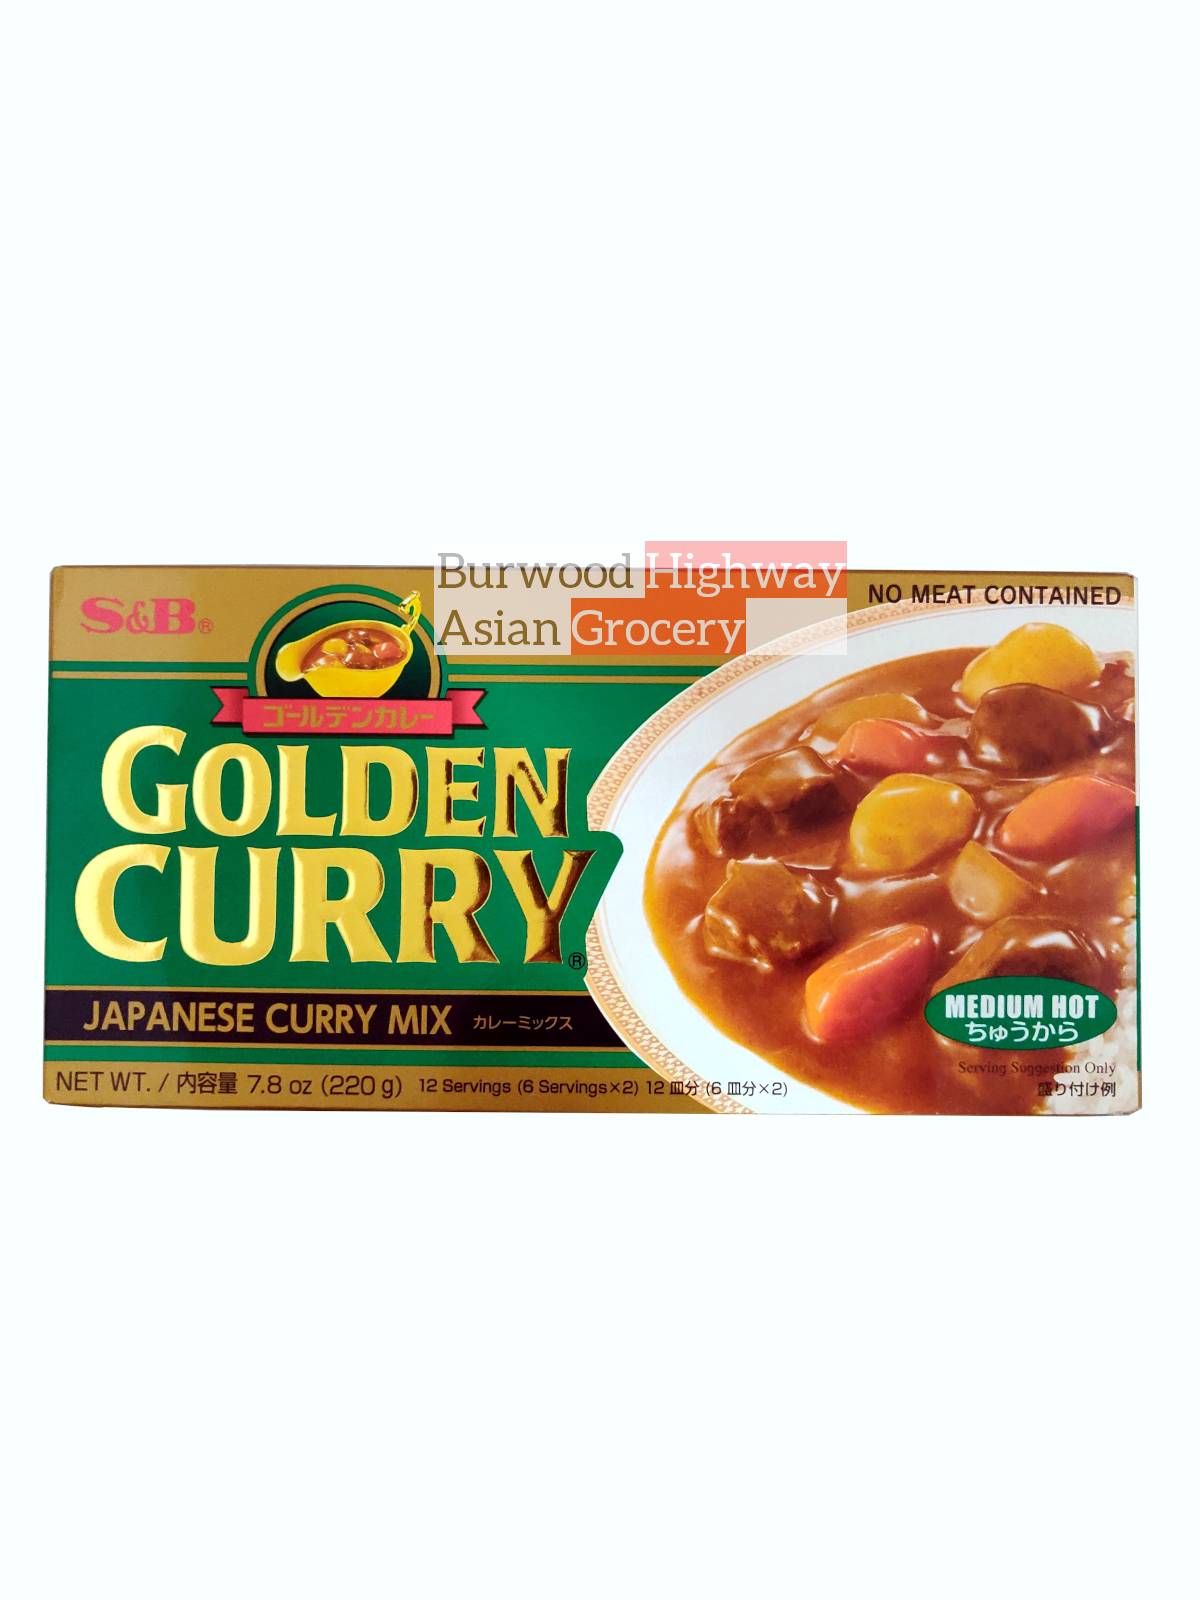 S&B Golden Curry Mix (Medium Hot) 220g - Burwood Highway Asian Grocery